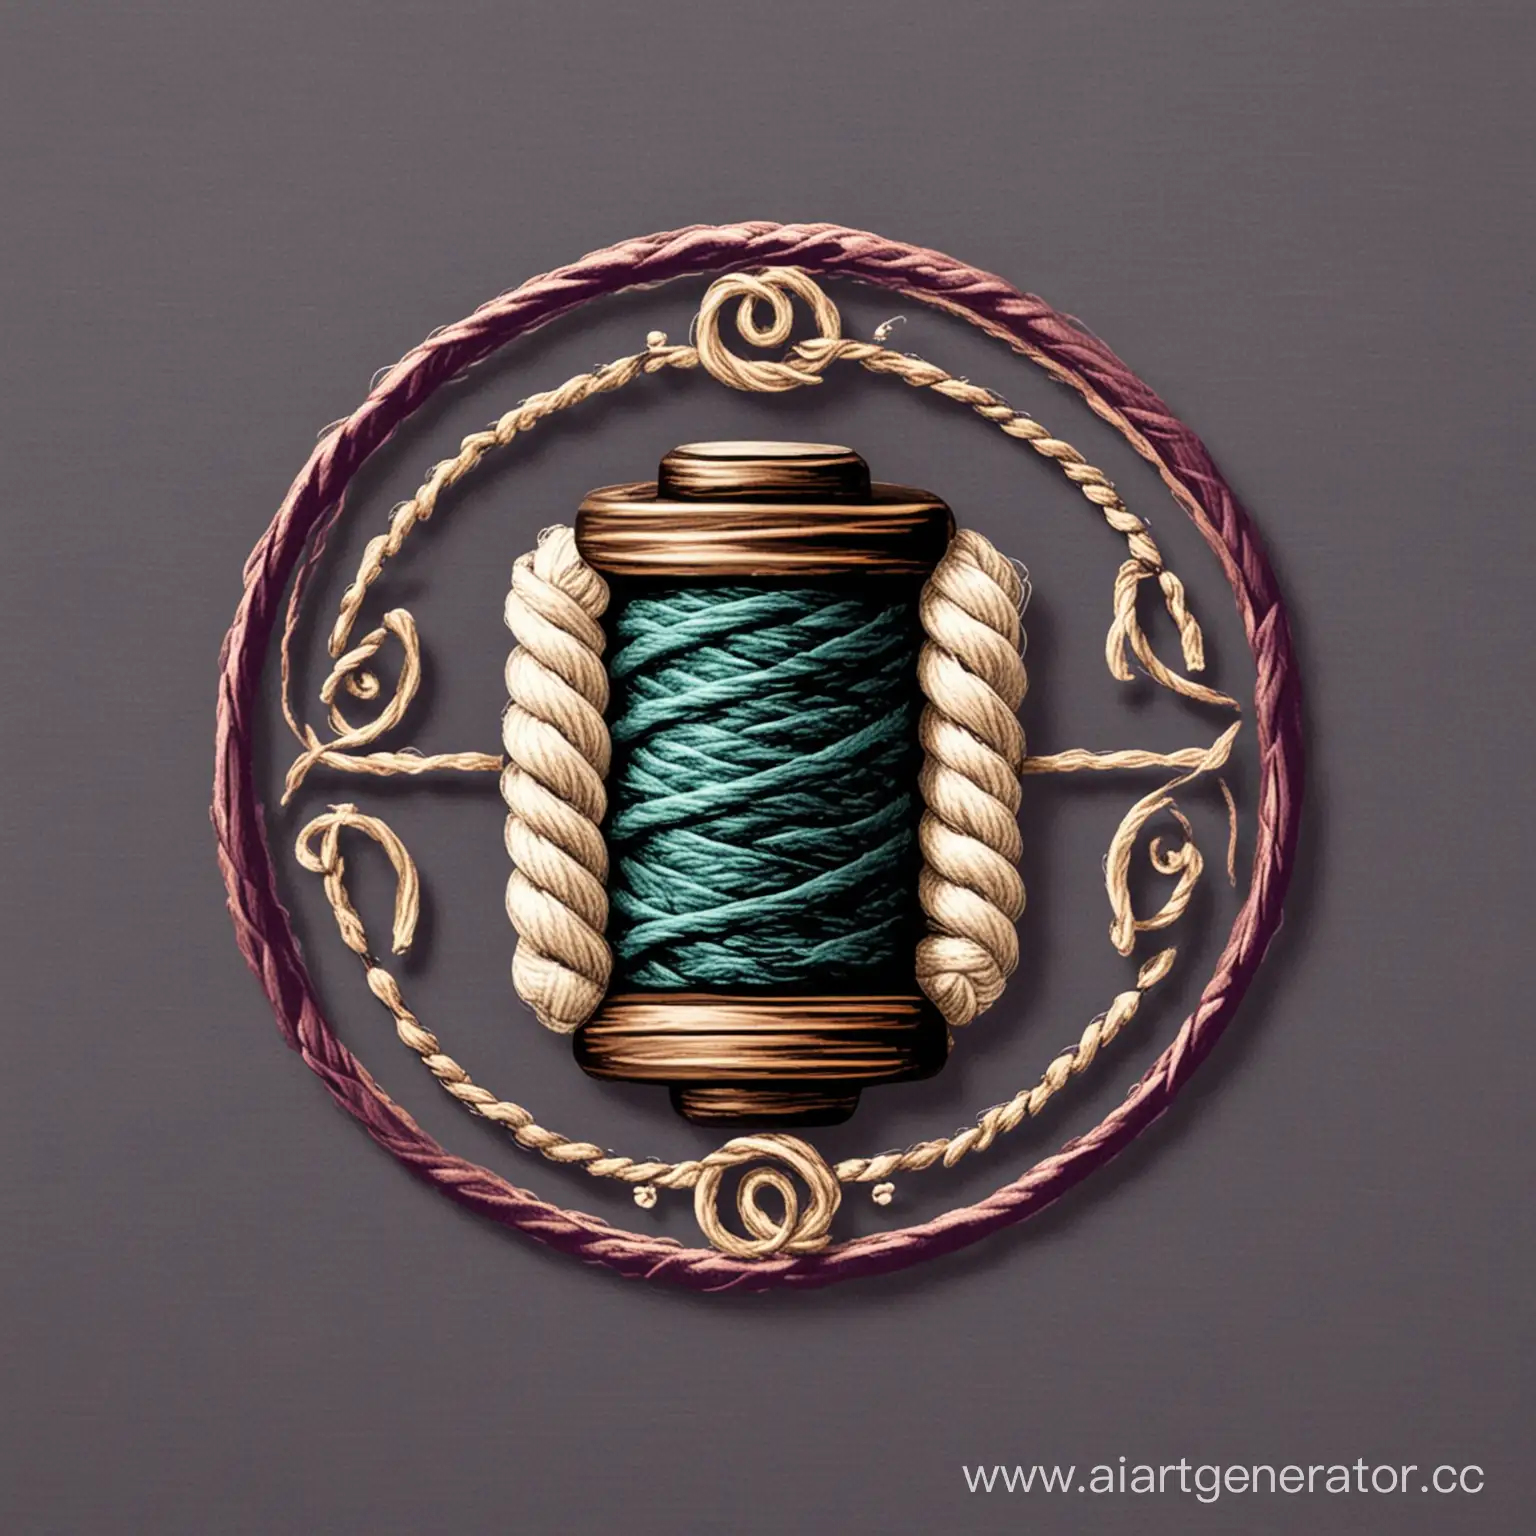 bobbin of yarn
logo
3 color